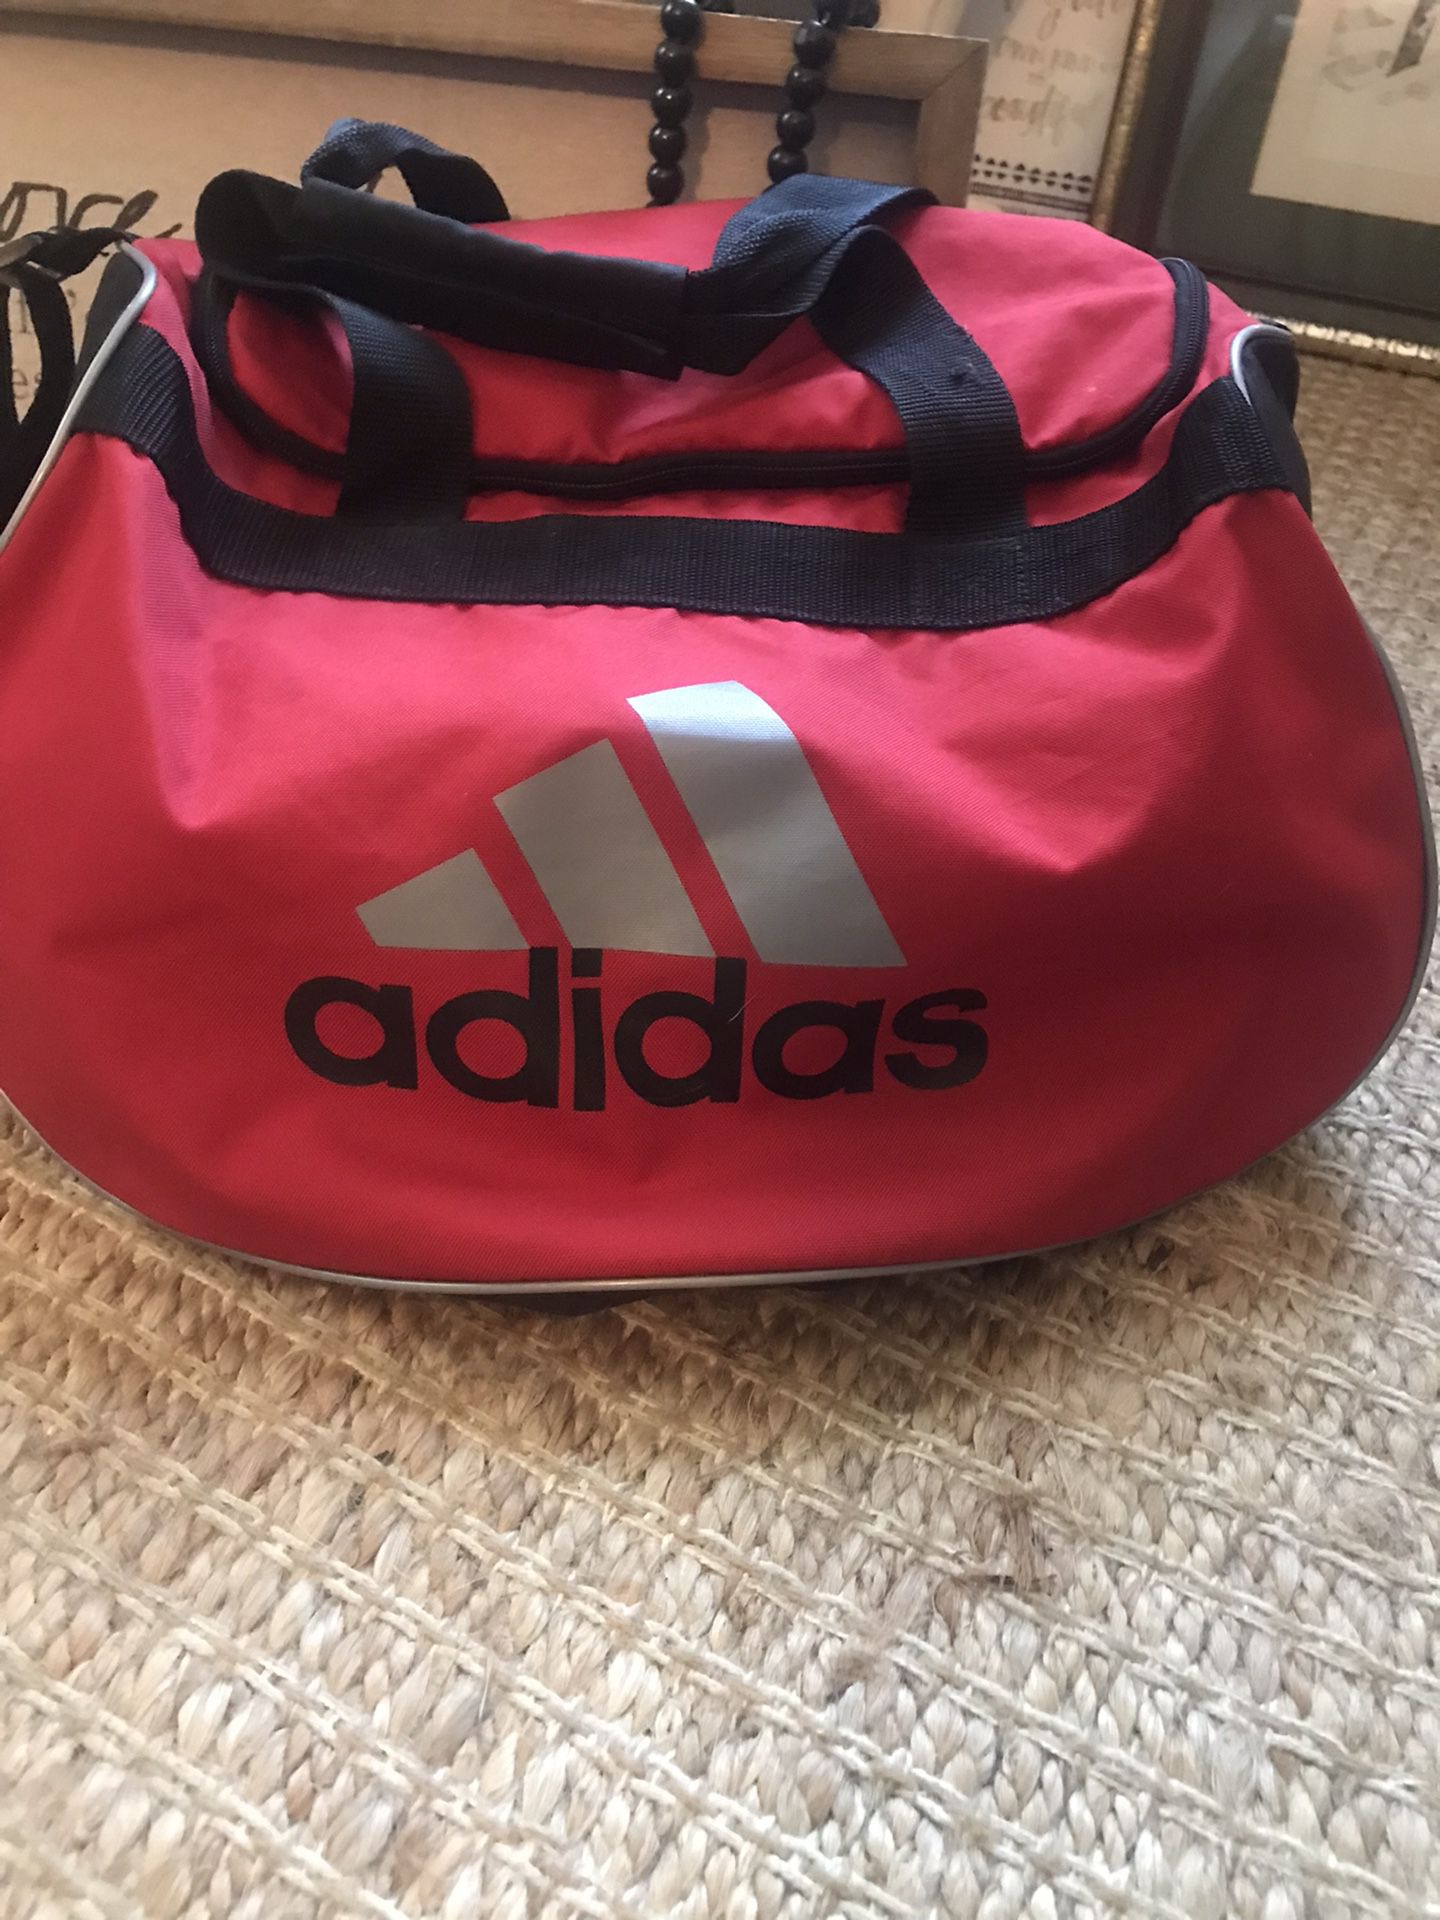 Red Adidas Duffle Bag